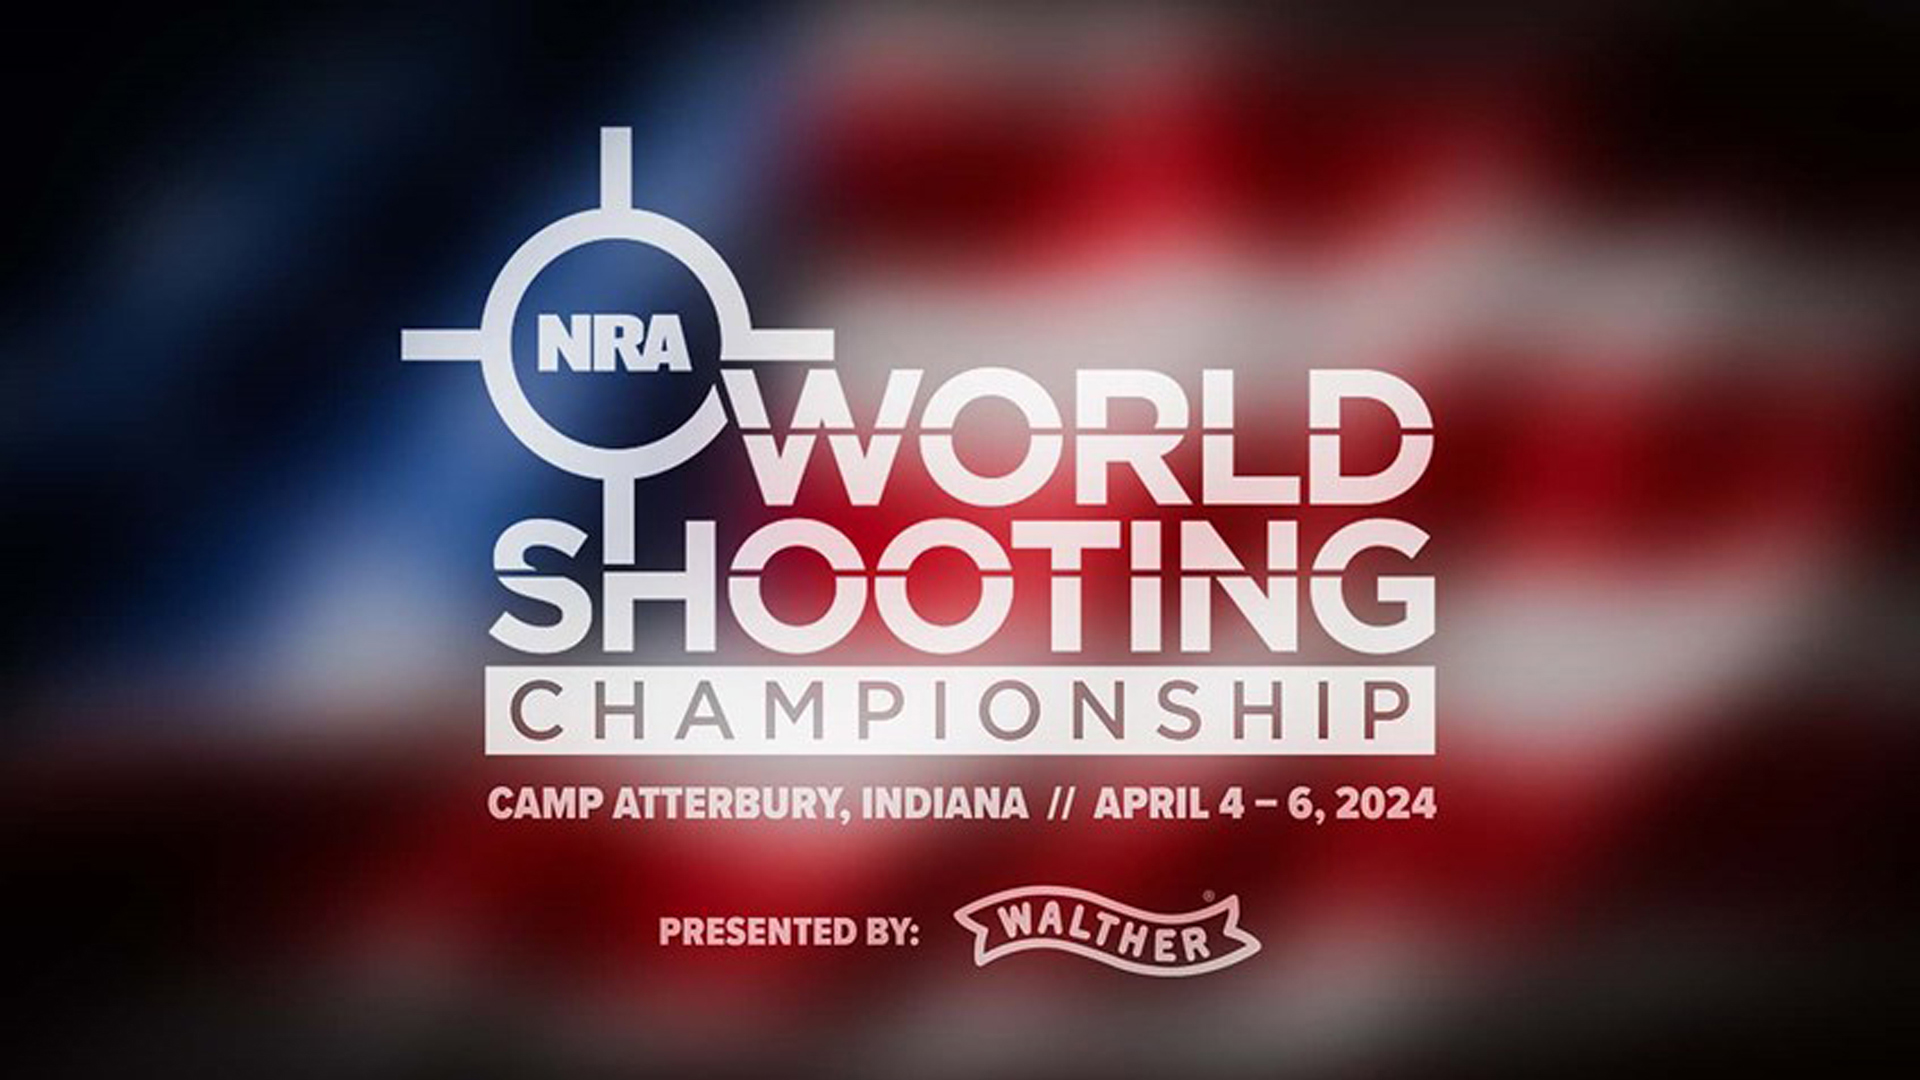 NRA World Shooting Championship logo